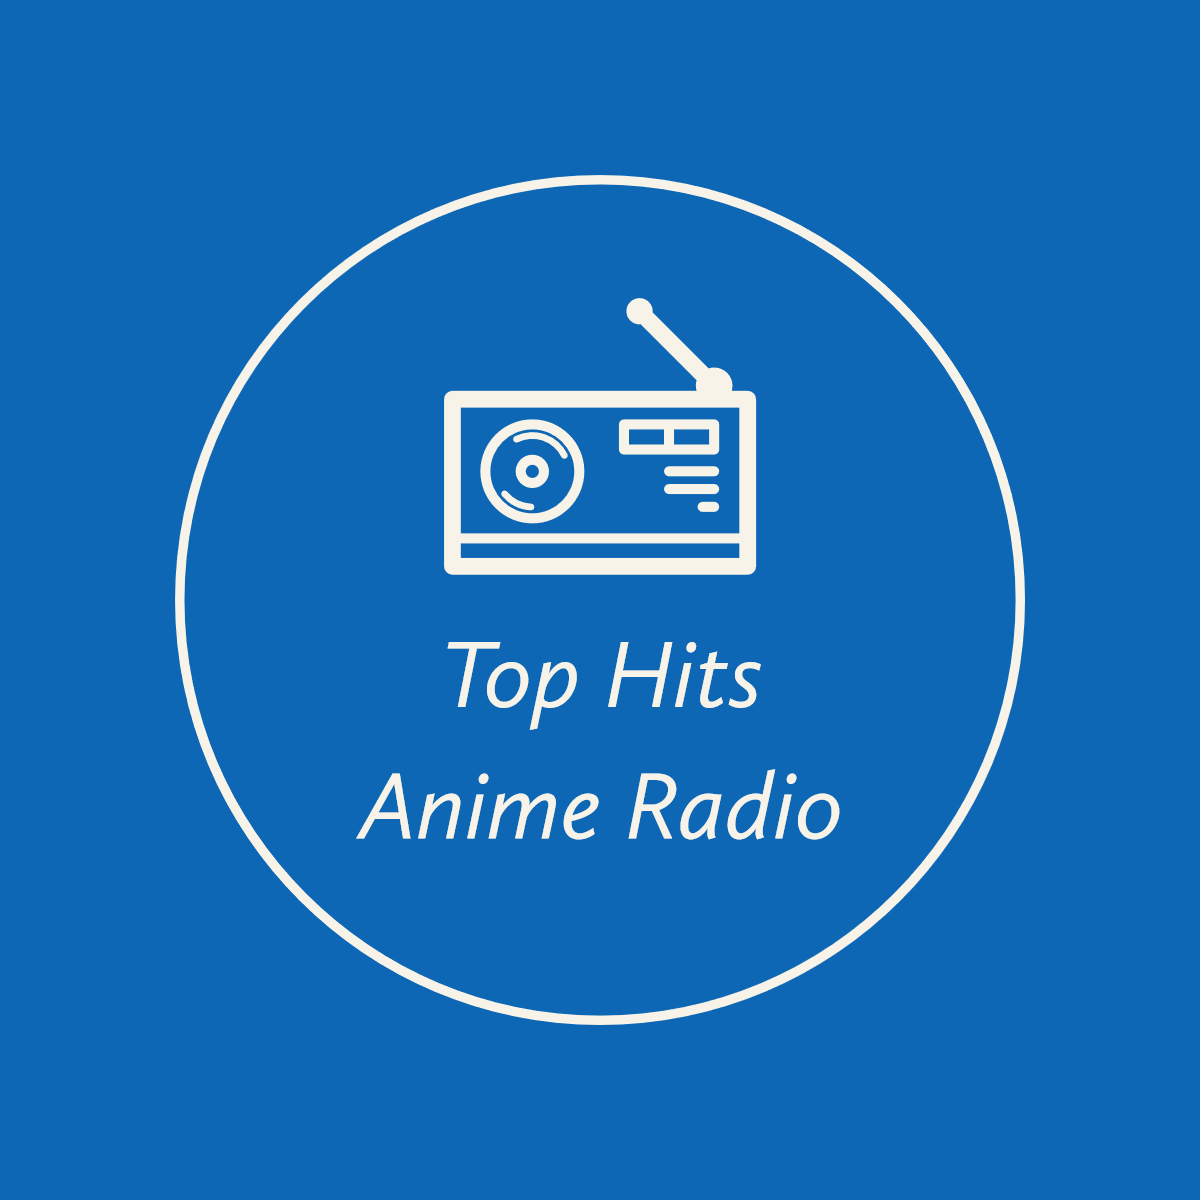 Top Hits Anime Radio